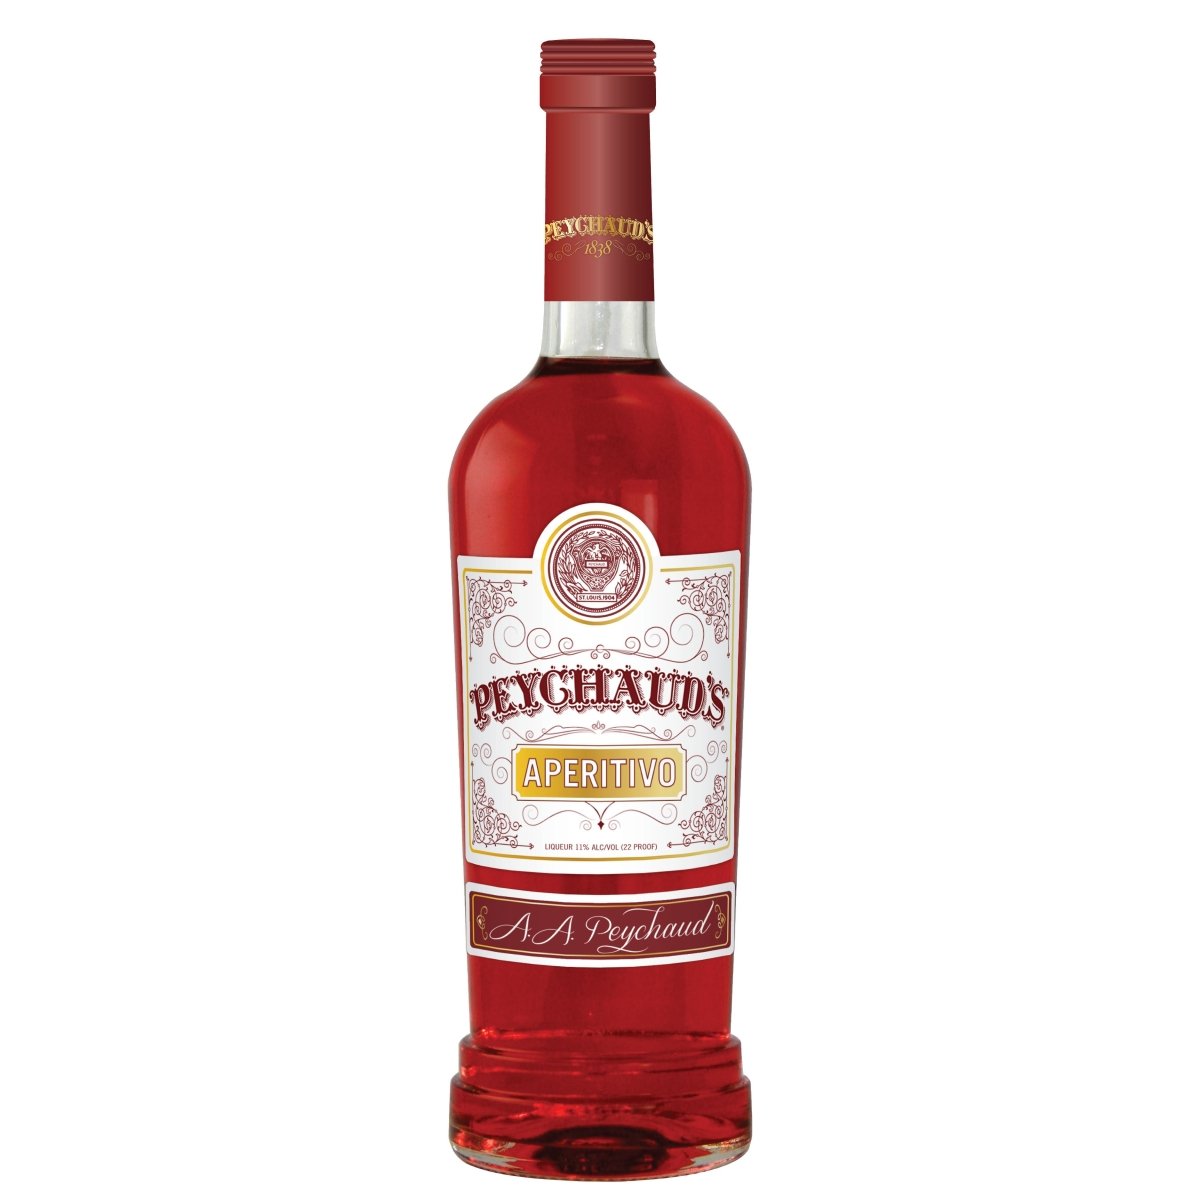 Peychauds Aperitivo - Latitude Wine & Liquor Merchant